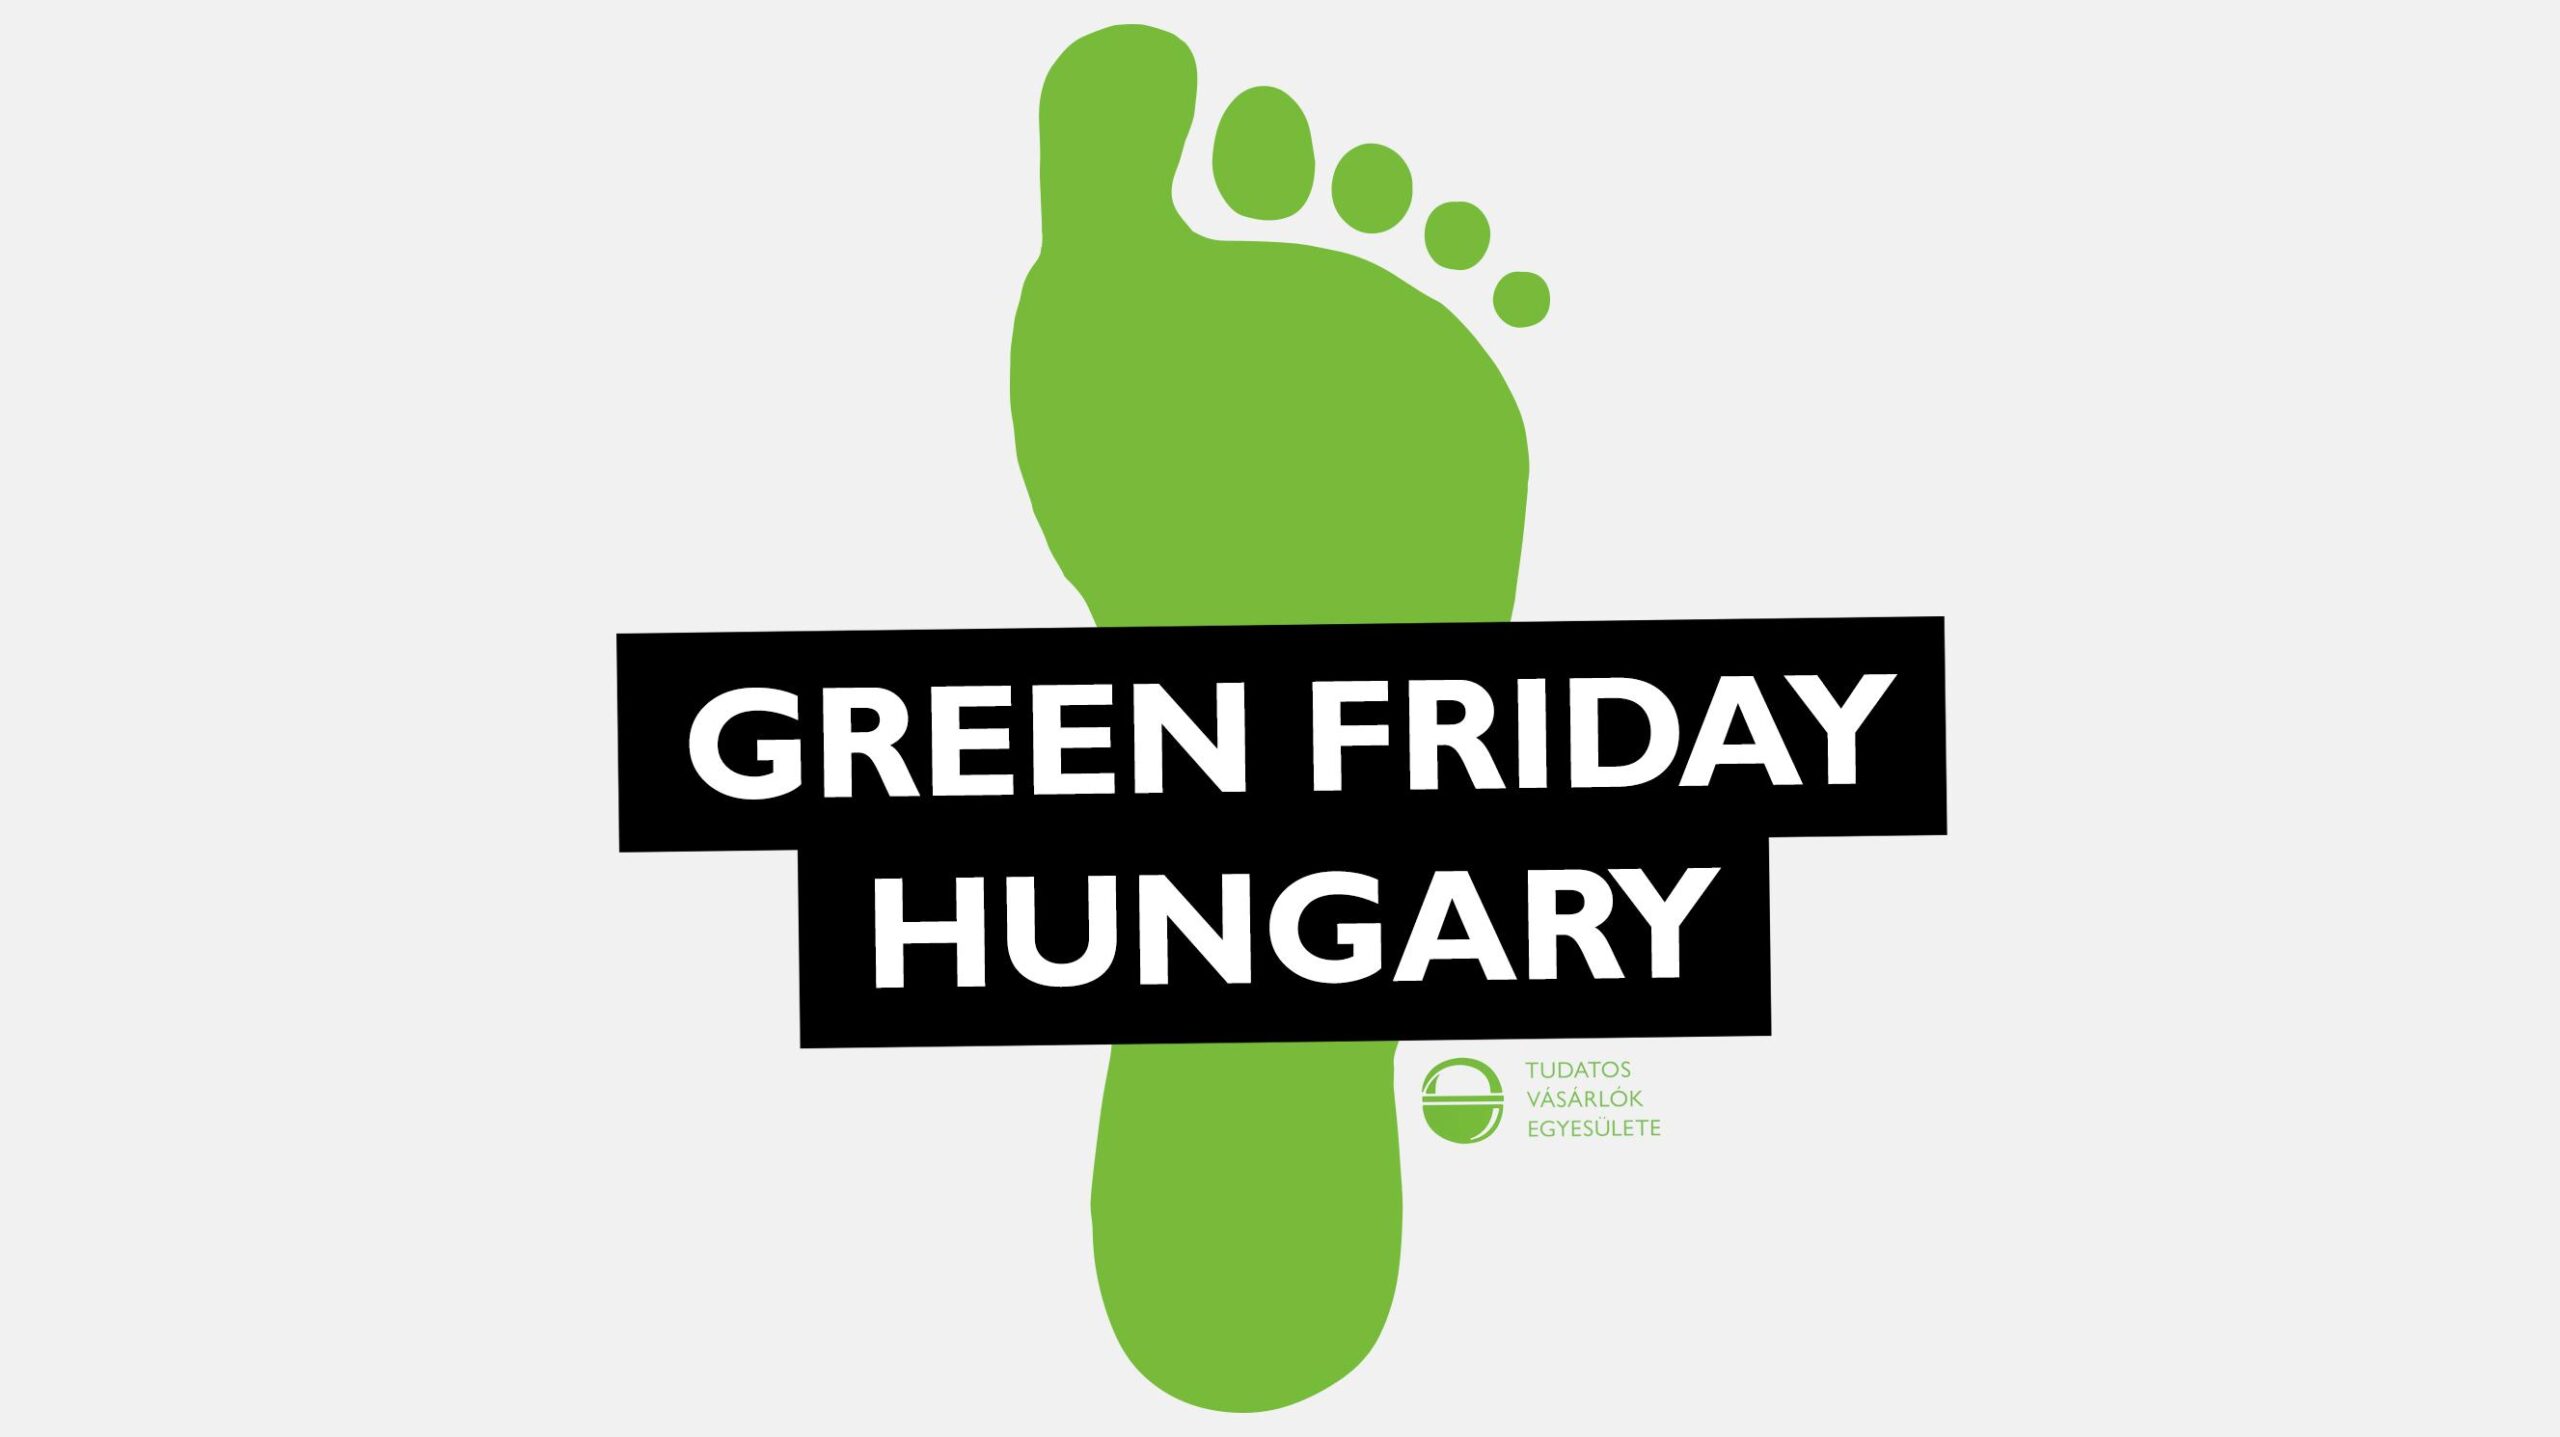 GREEN FRIDAY HUNGARY